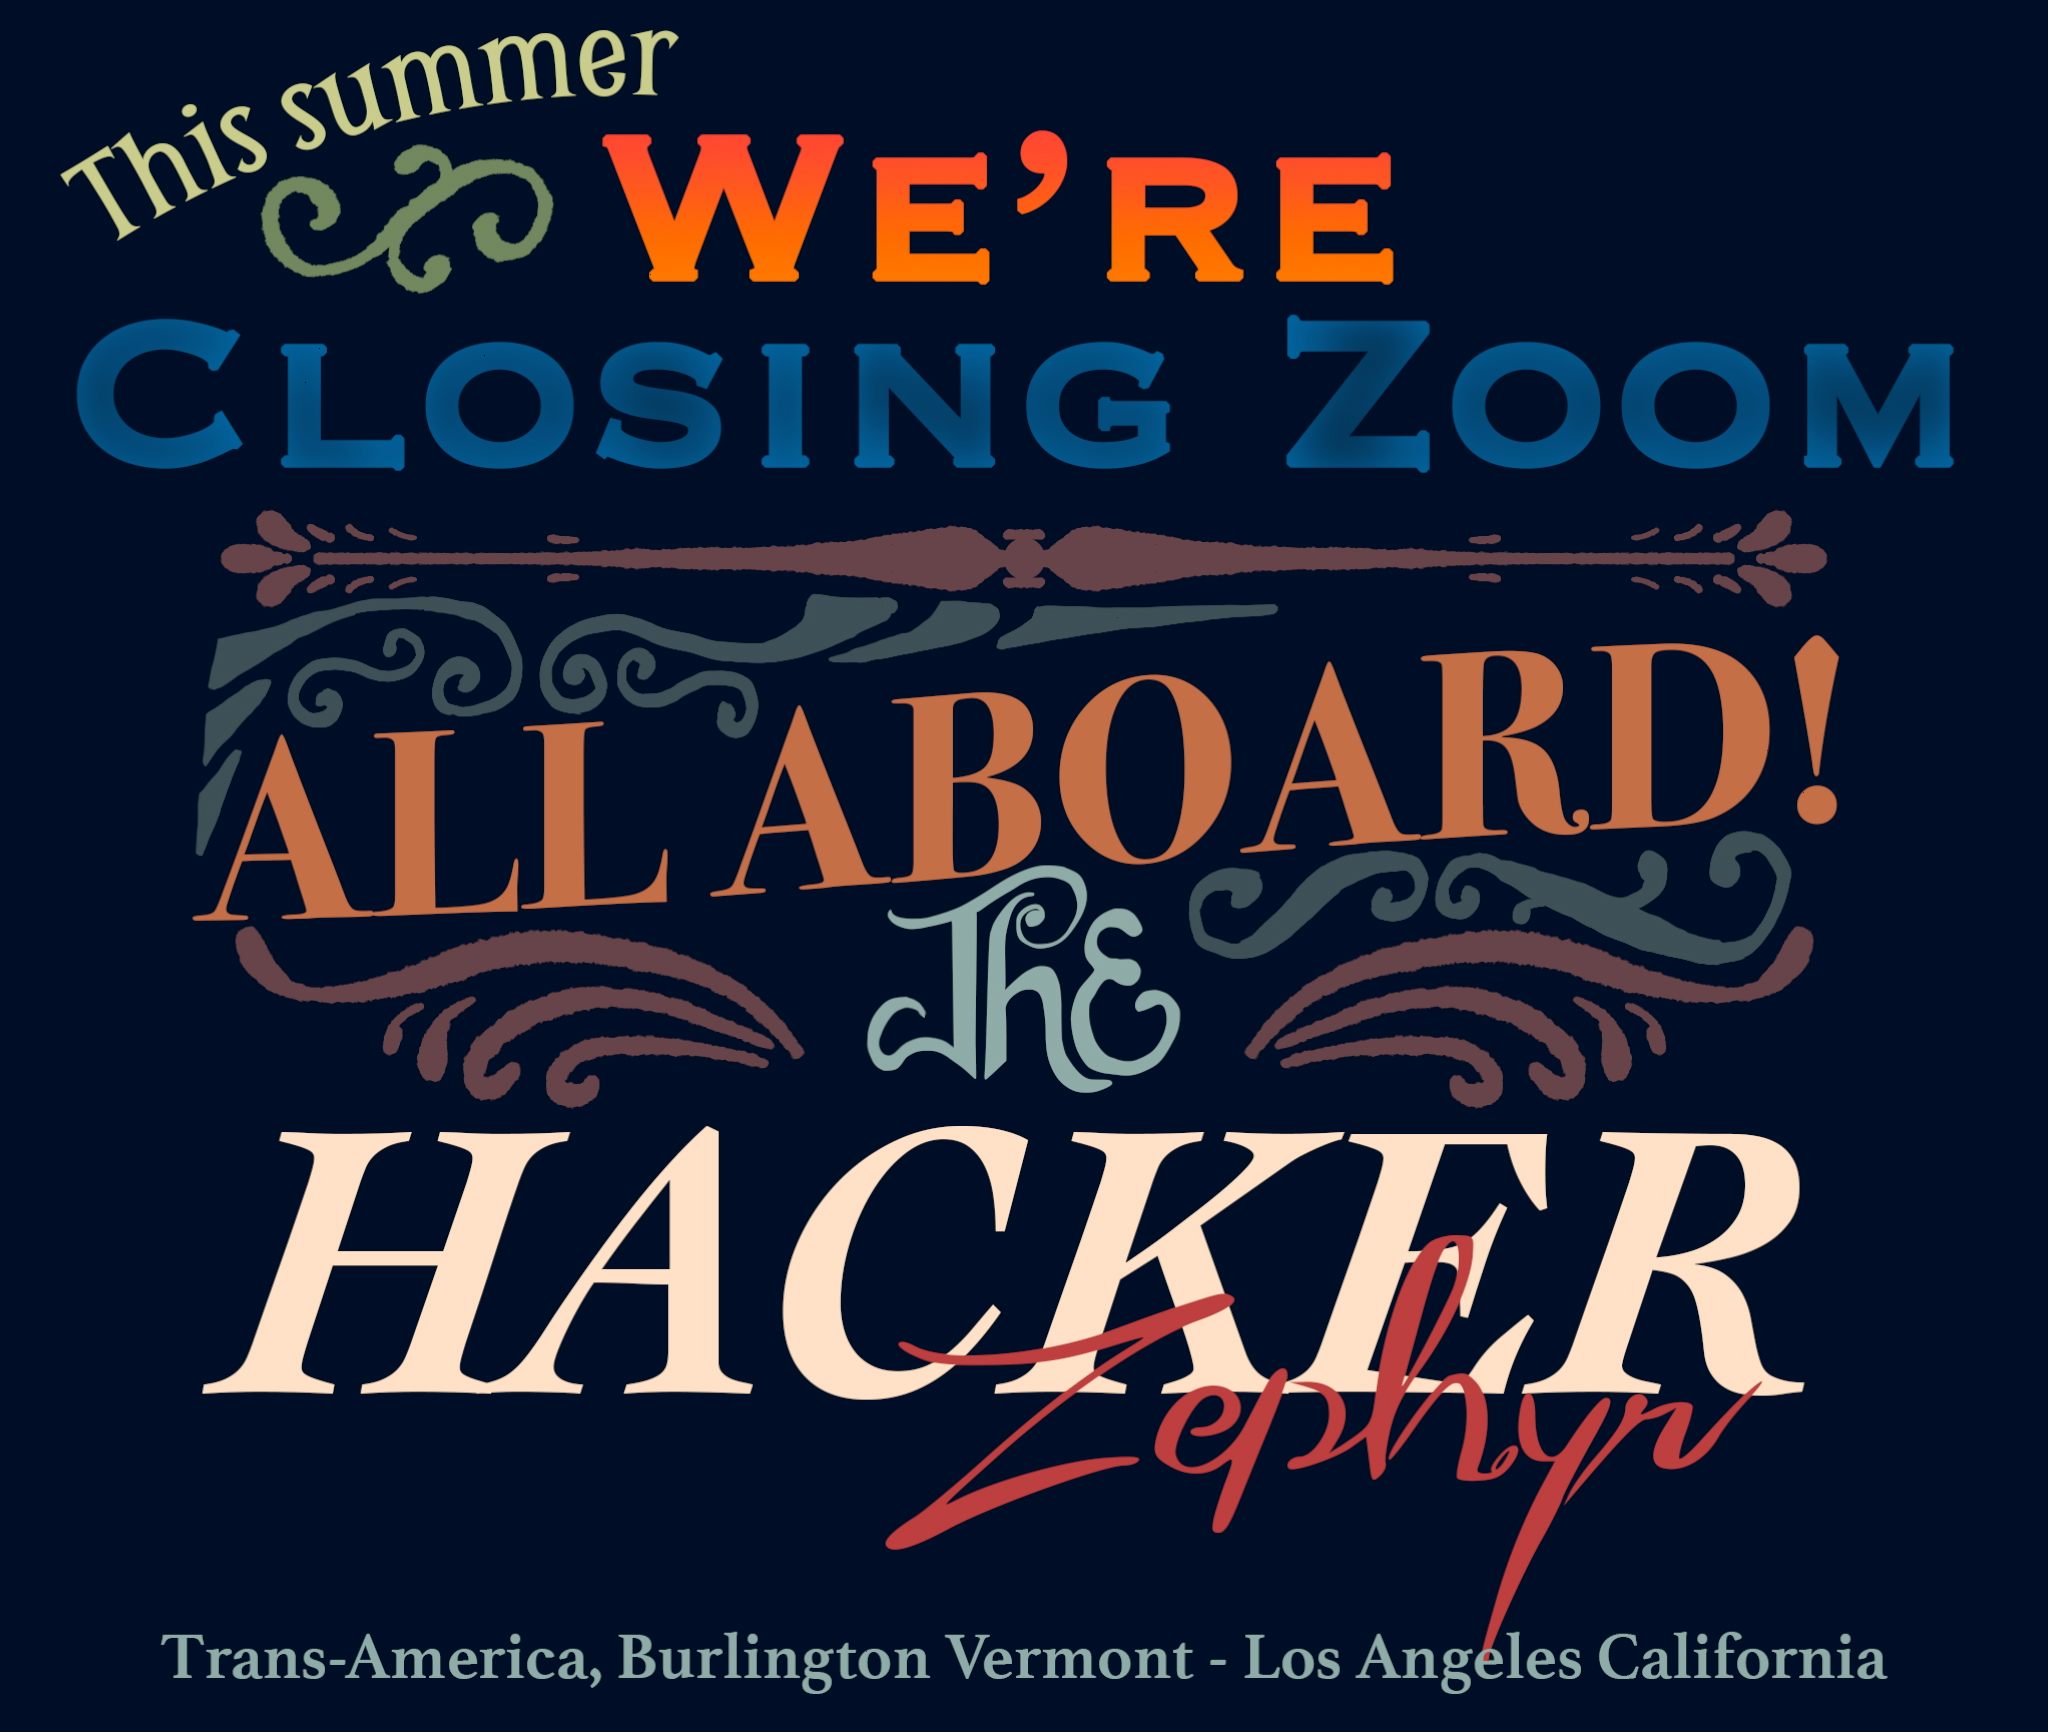 This summer, we're closing Zoom. All aboard the Hacker Zephyr. Trans America, Burlington Vermont - Los Angeles California